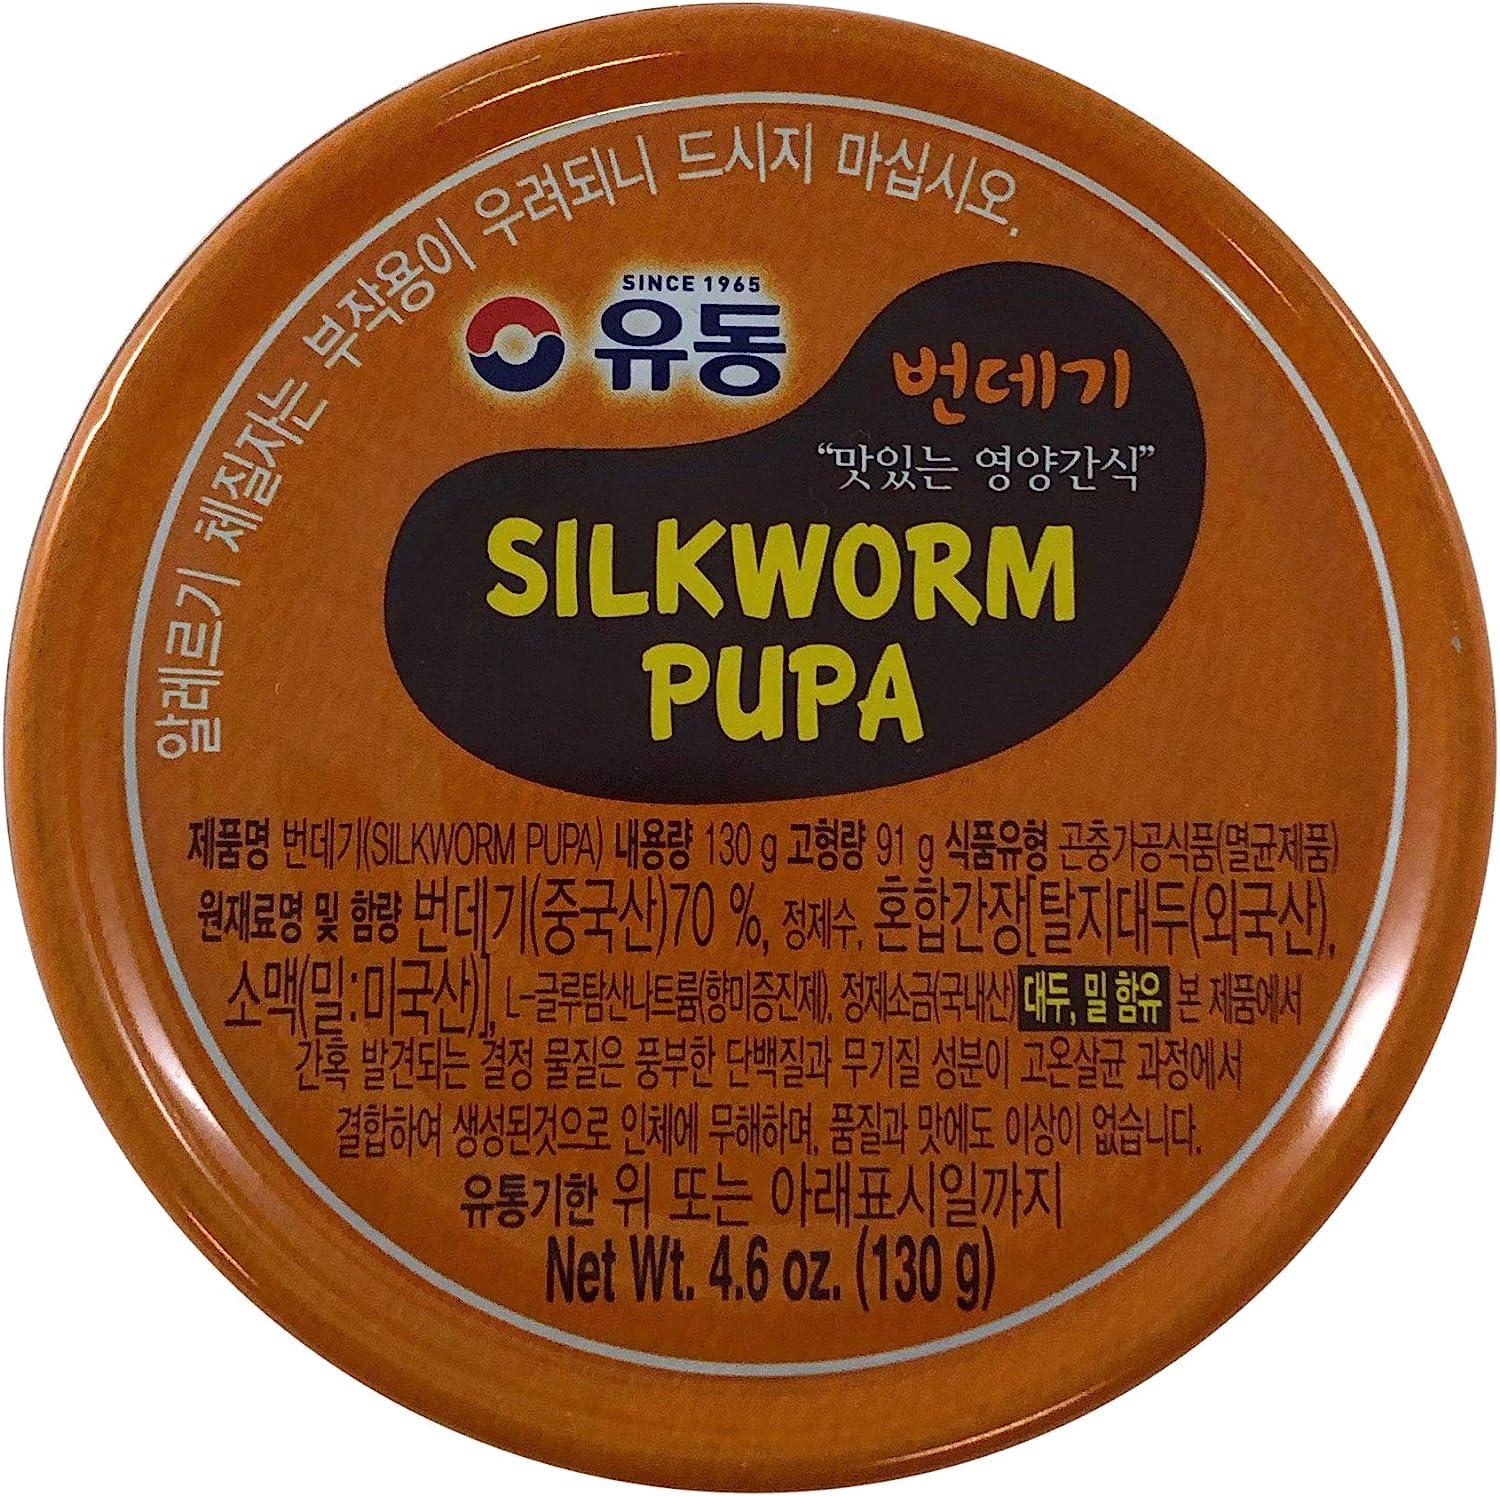 Yudong Silkworm Pupa - 130g/4.6oz - 0